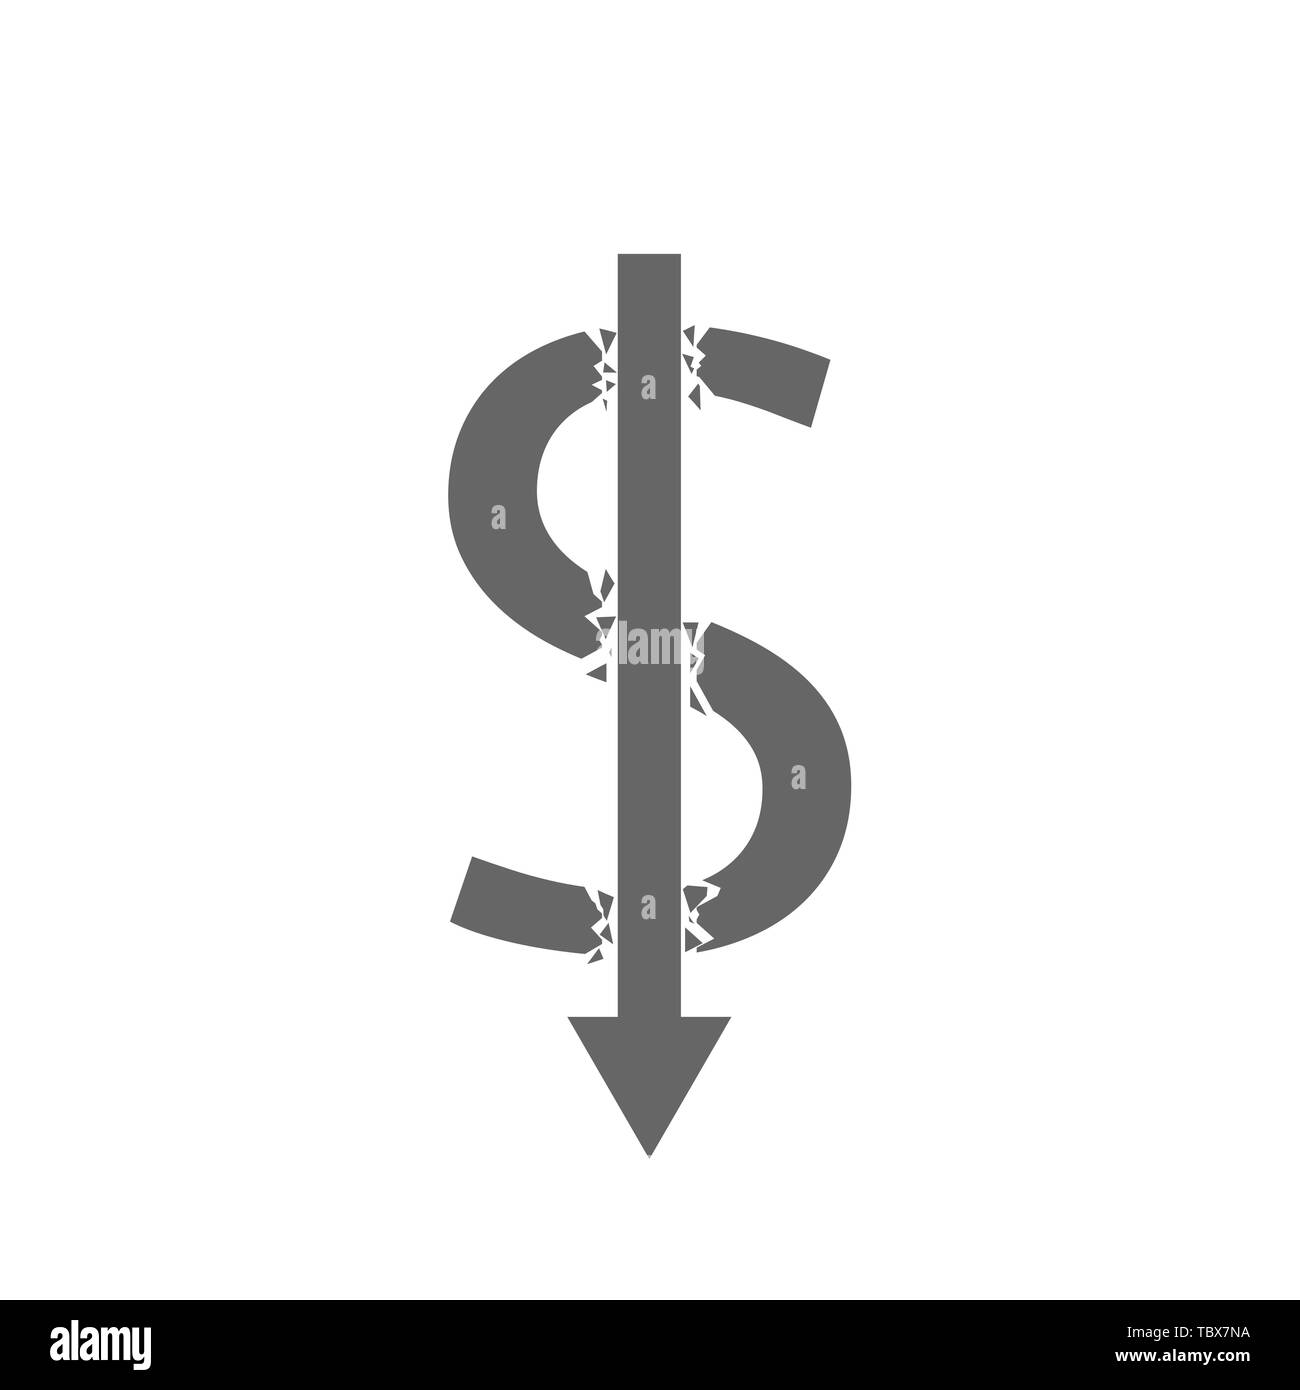 Financial damage. Dollar sign and decline arrow symbol Vector illustration Stock Vector